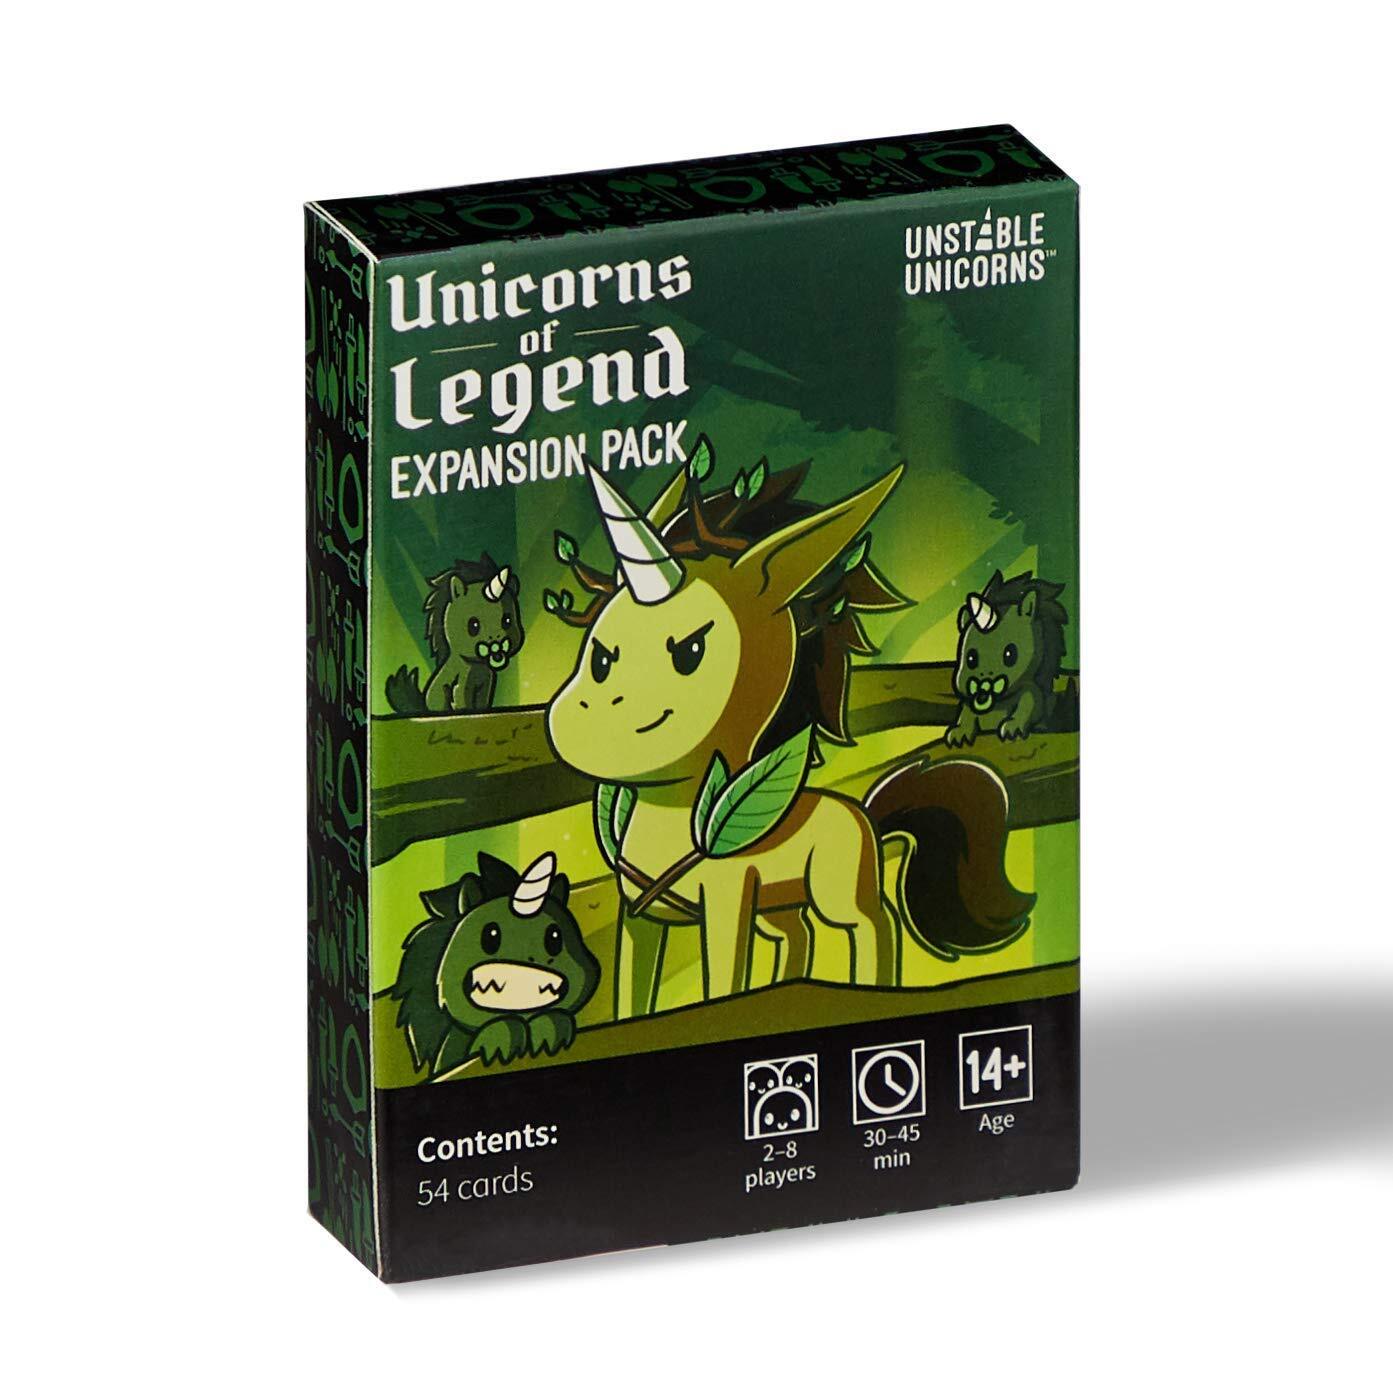 Unicorns of Legend Expansion Pack